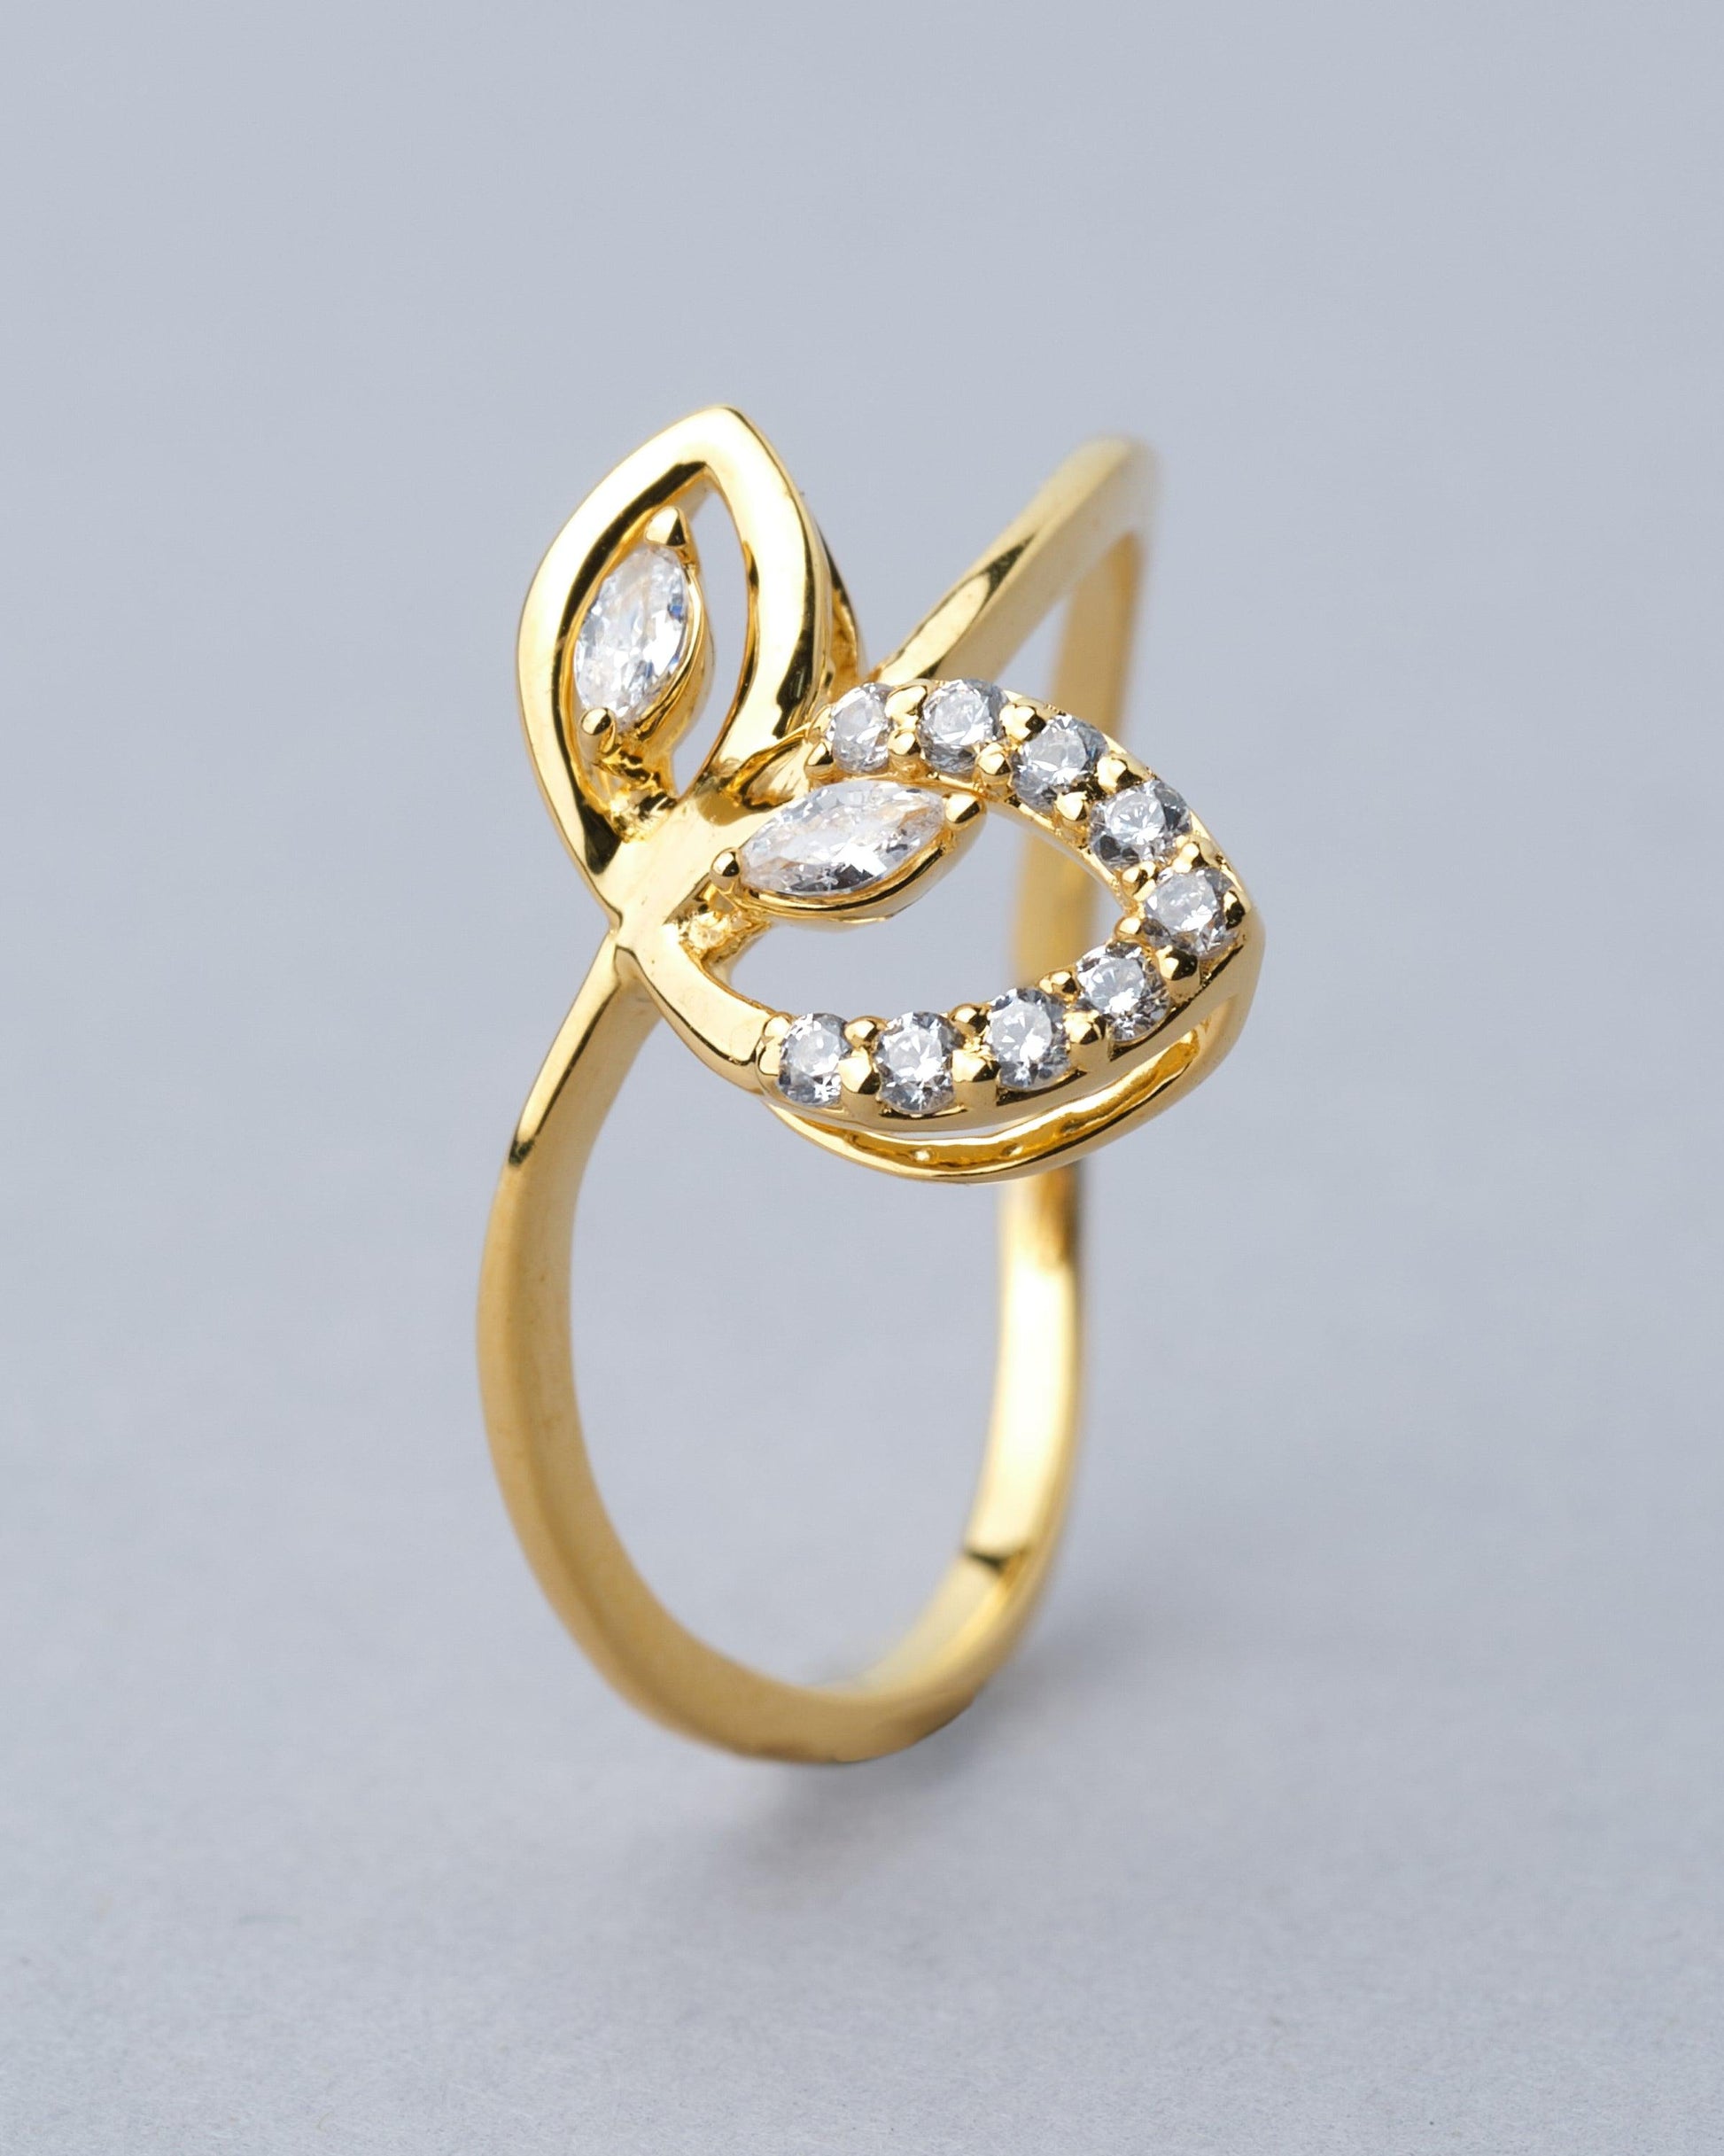 Gleamig Gold & Diamond Ring - Chandrani Pearls